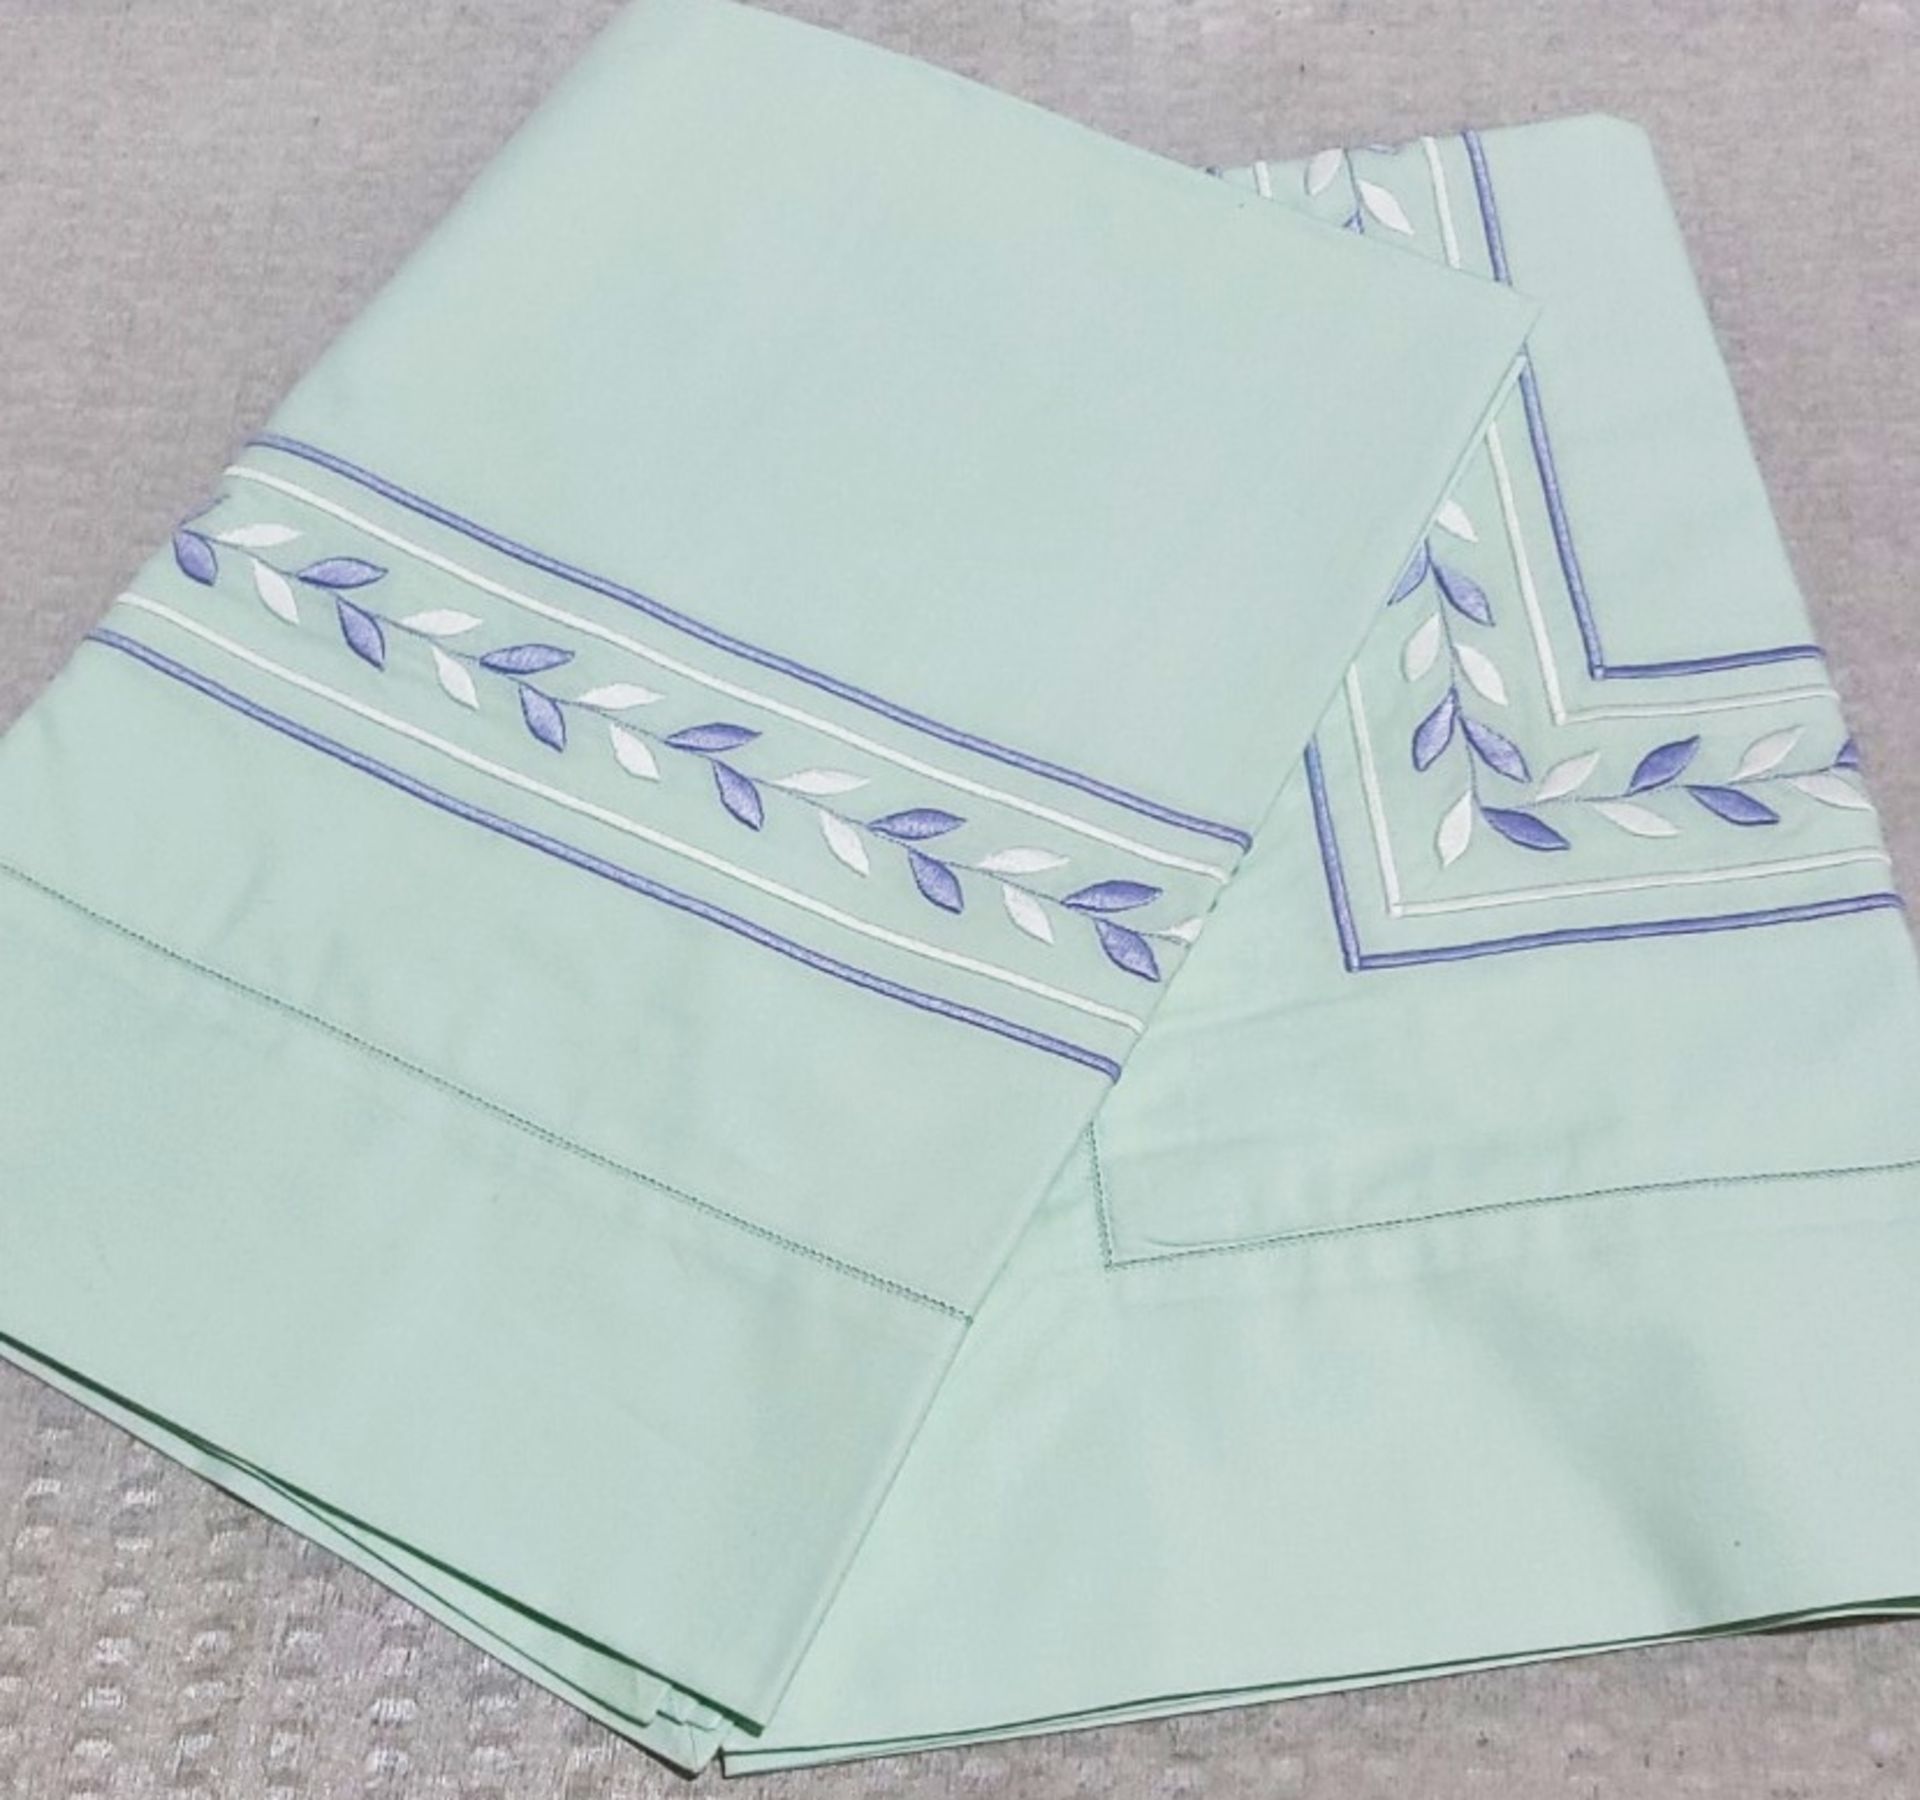 Set of 2 x PRATESI 'Impero' Blue & White Embroidered & Hem Stitched Teal Pillow Shams - Image 2 of 4